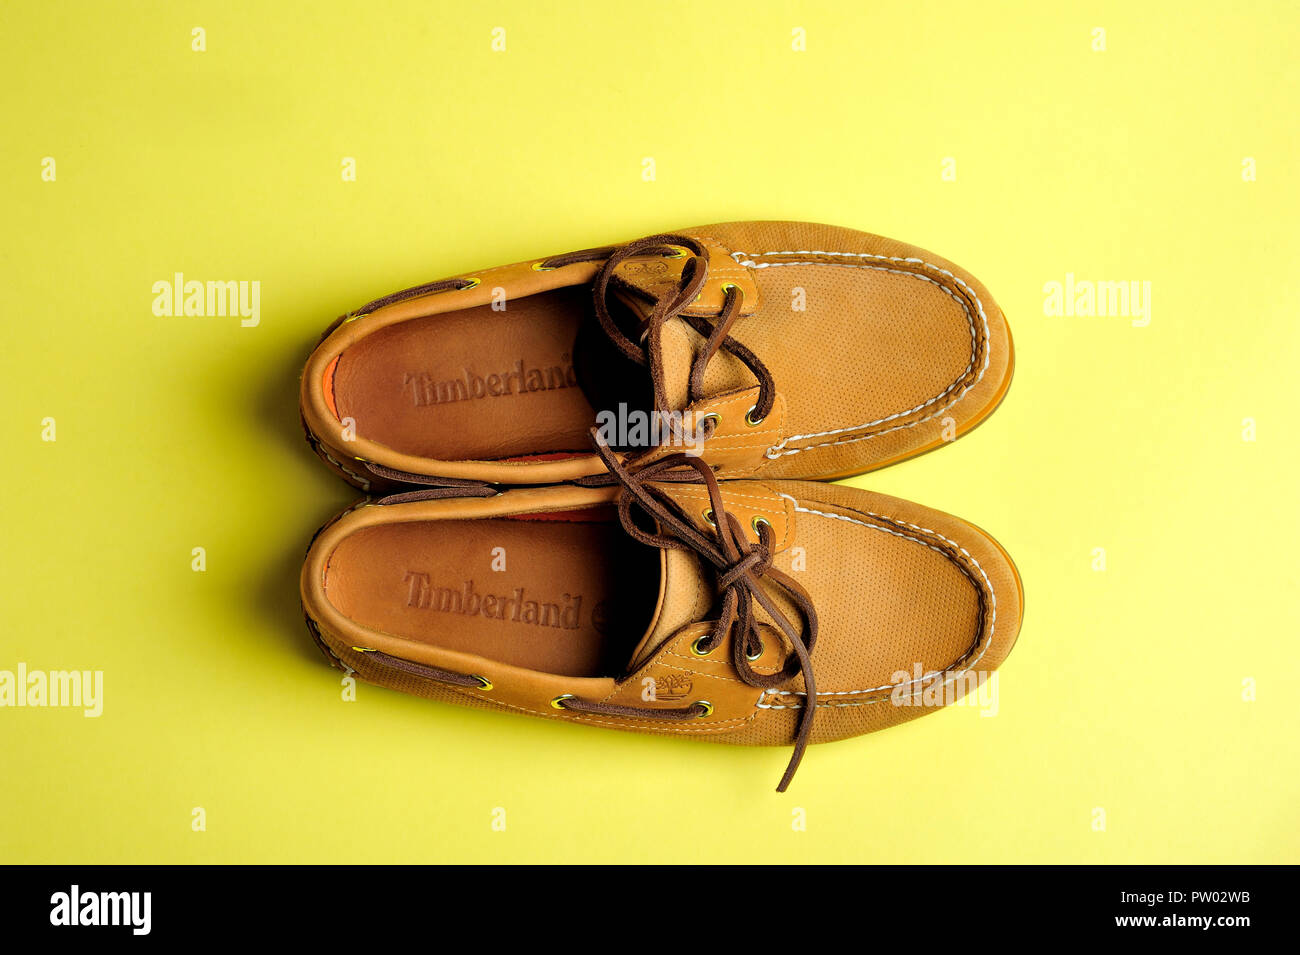 zapatos timberland, bota, marrón, sport, clásico, ropa, sucio, detalle, ejecutivo, moda, pie, foot-gear, calzado, Fotografía de stock -